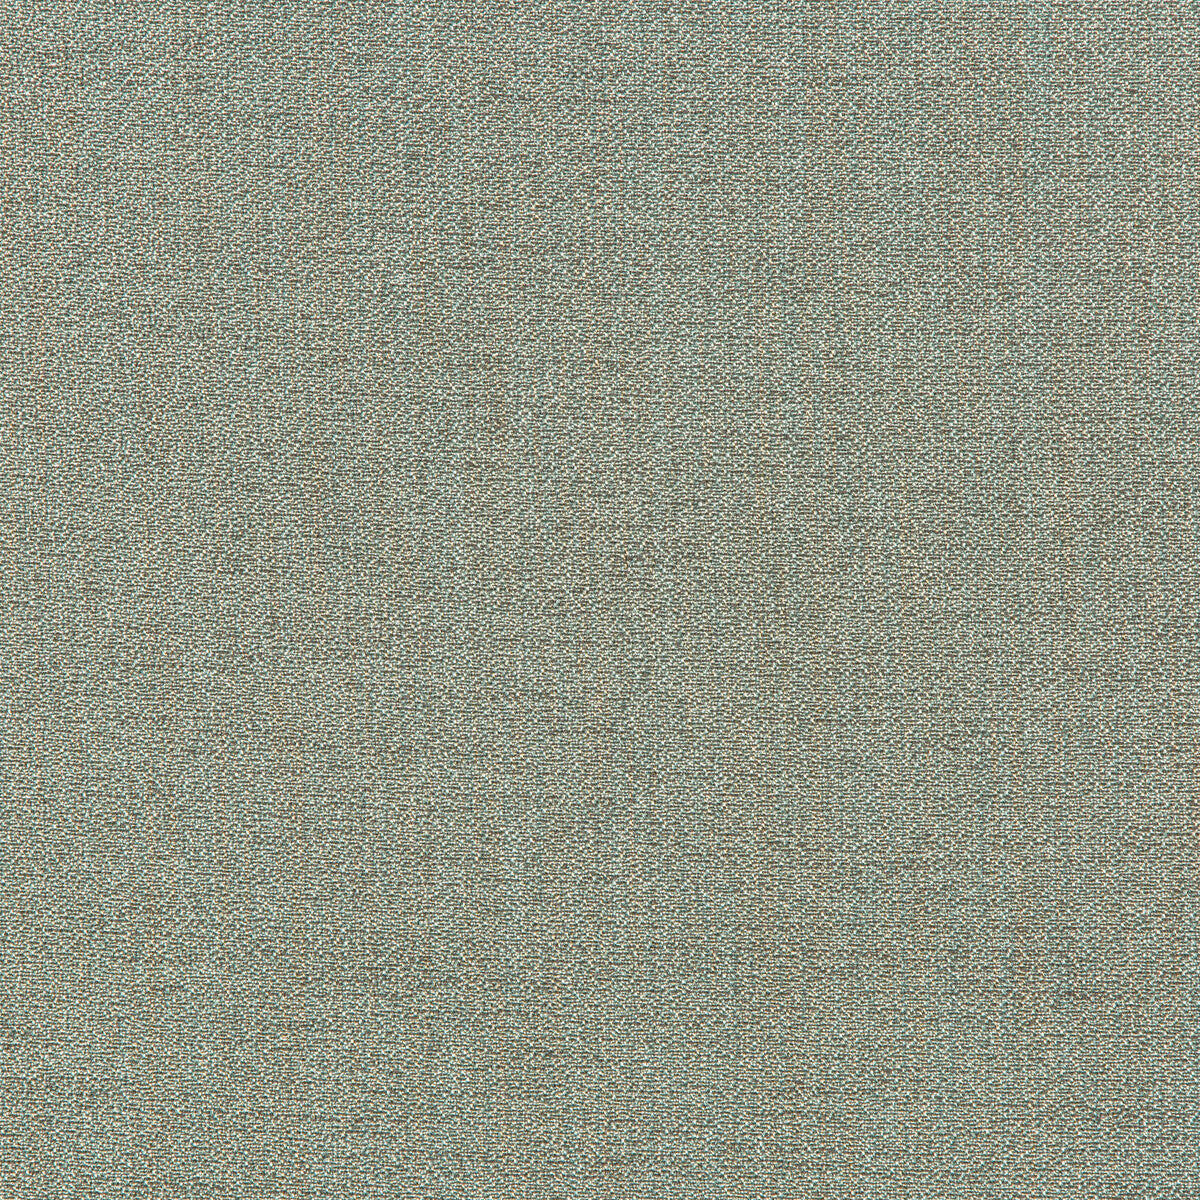 Kravet Smart fabric in 35942-23 color - pattern 35942.23.0 - by Kravet Smart in the Performance Kravetarmor collection